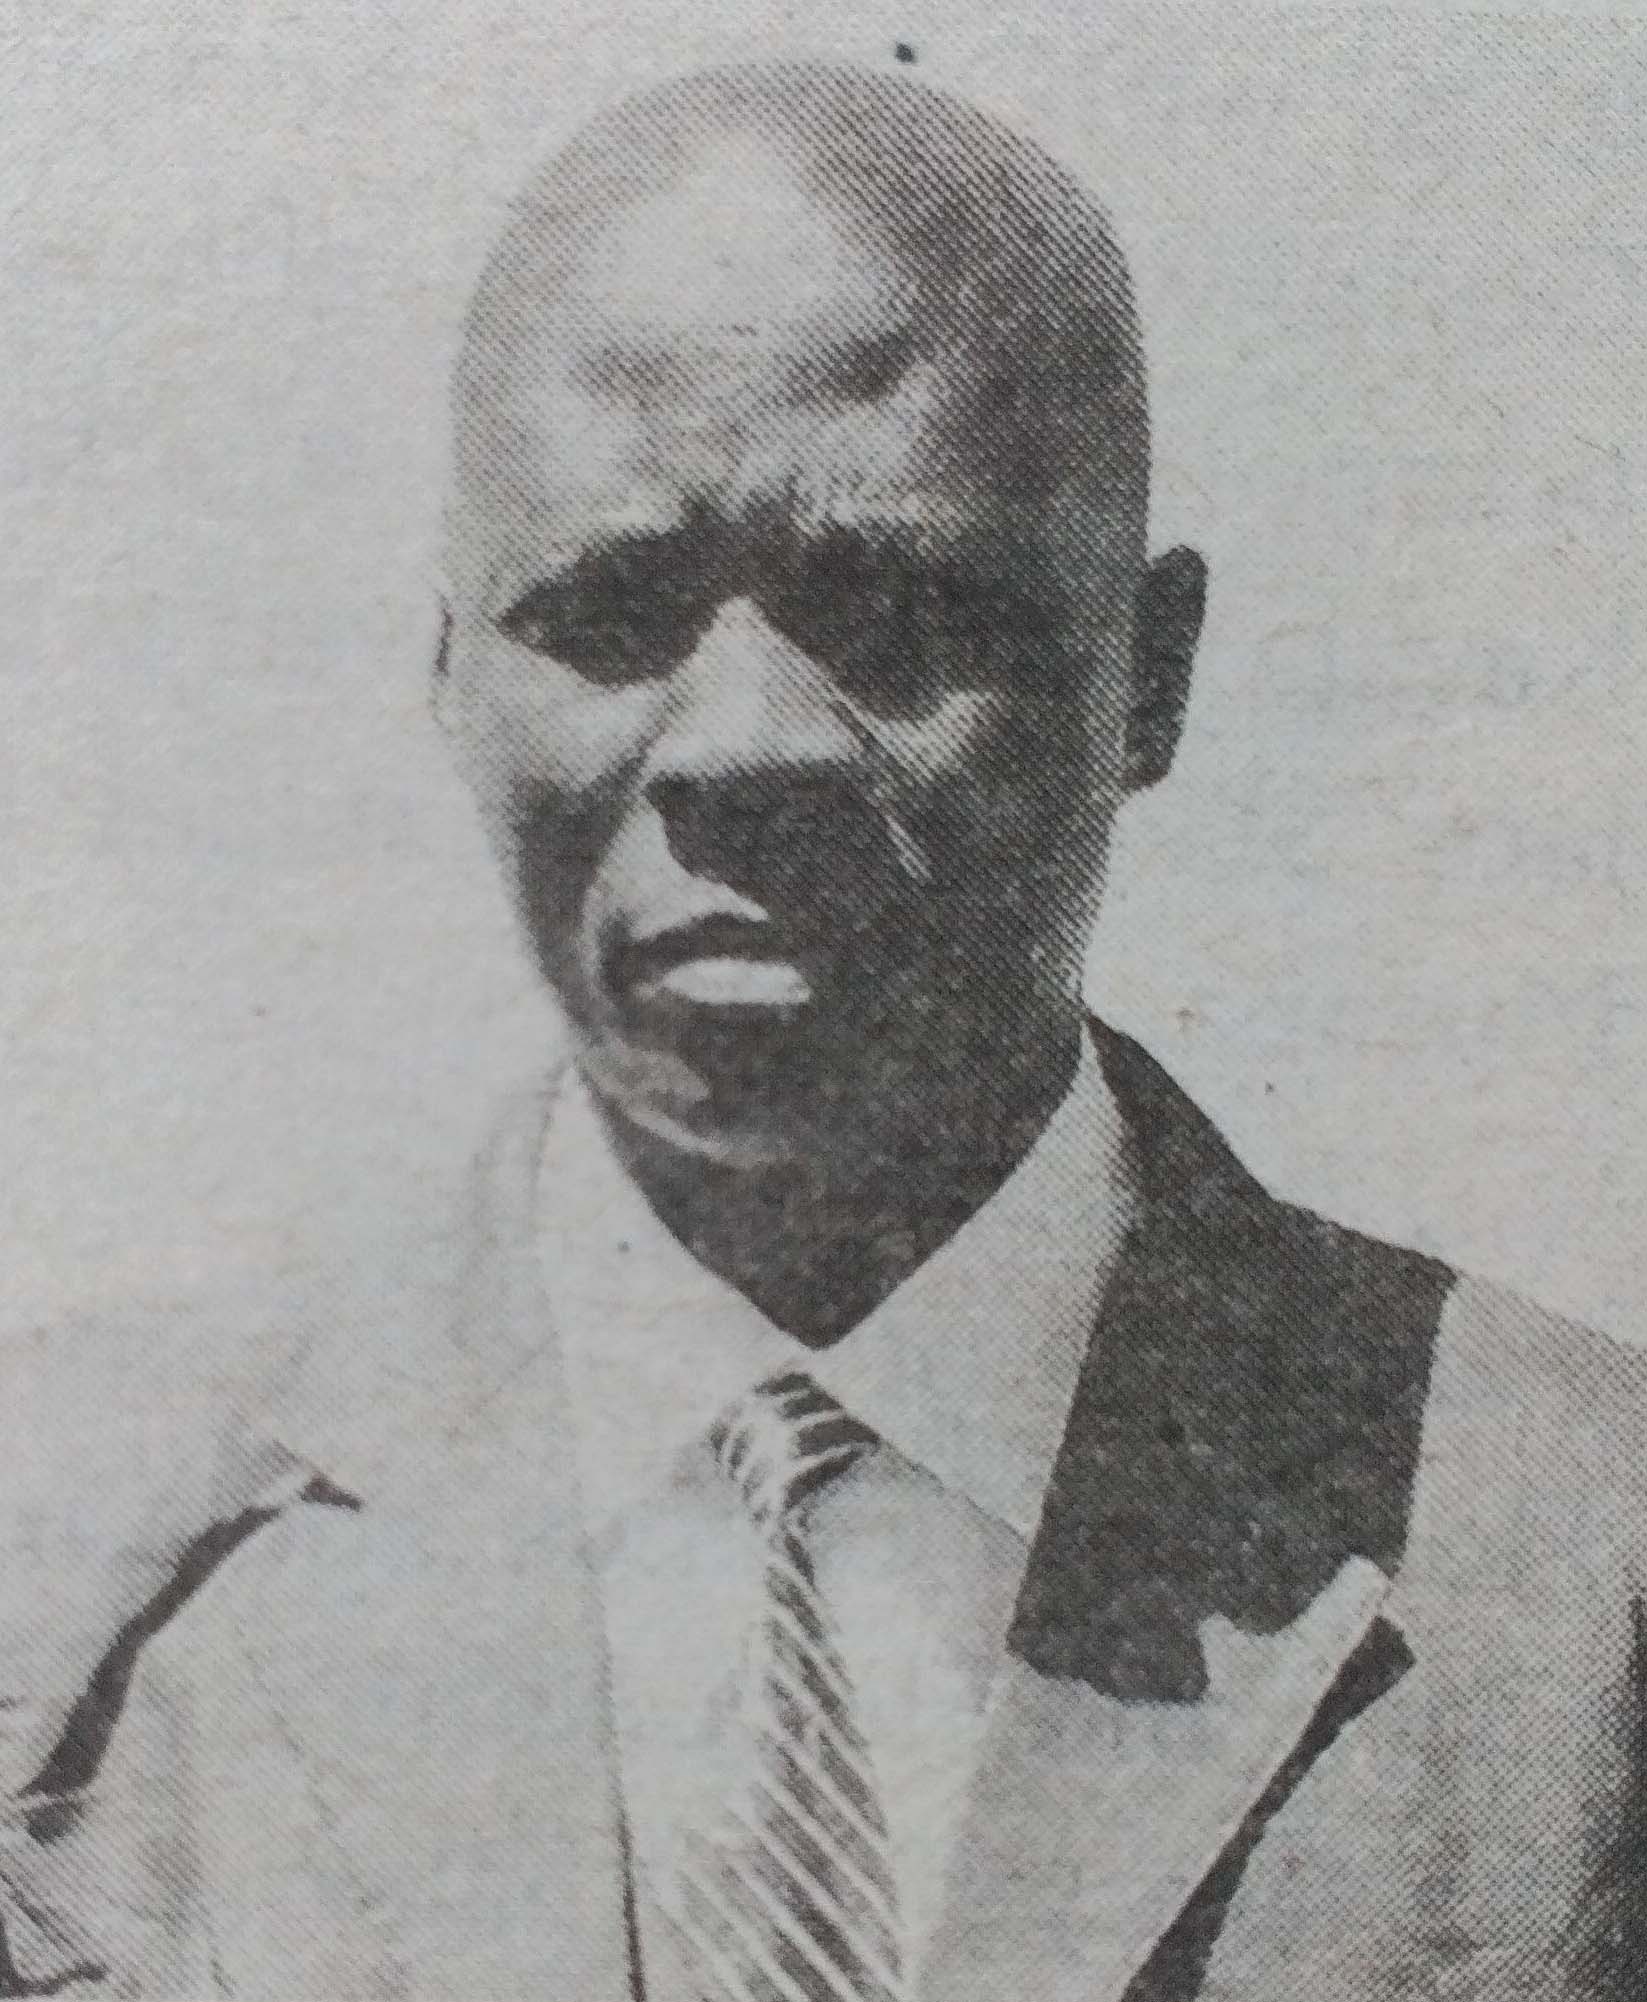 Obituary Image of John Kimutai Chebii (Chepyang)